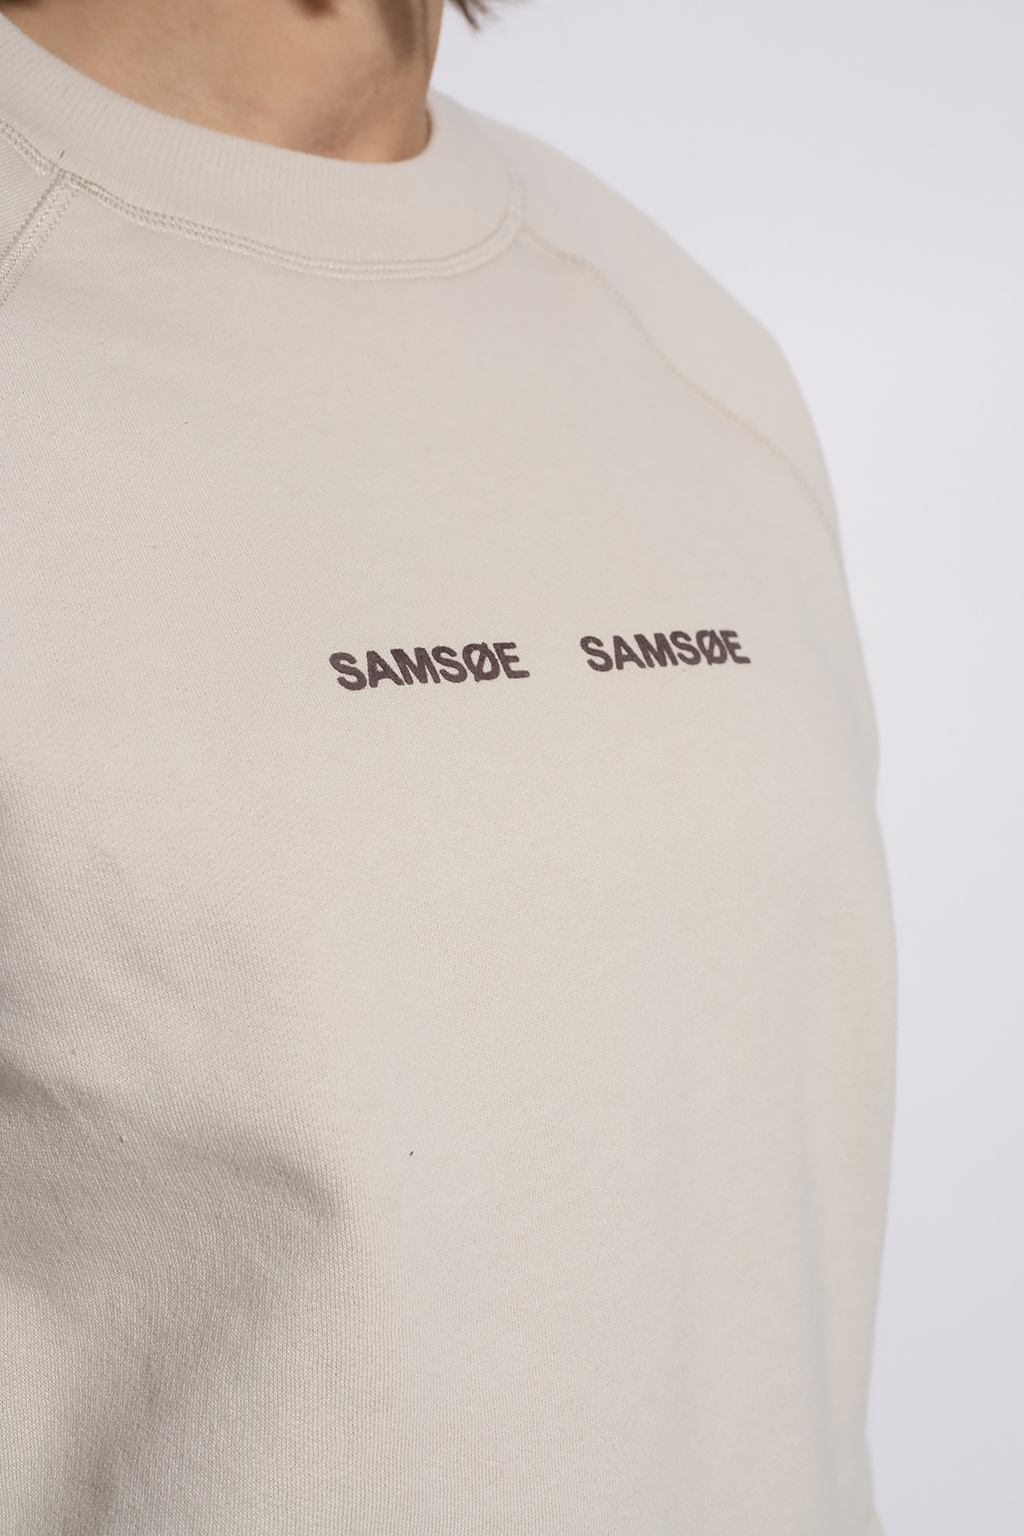 Samsøe Samsøe How Do You Style Sporty & Rich T-shirts